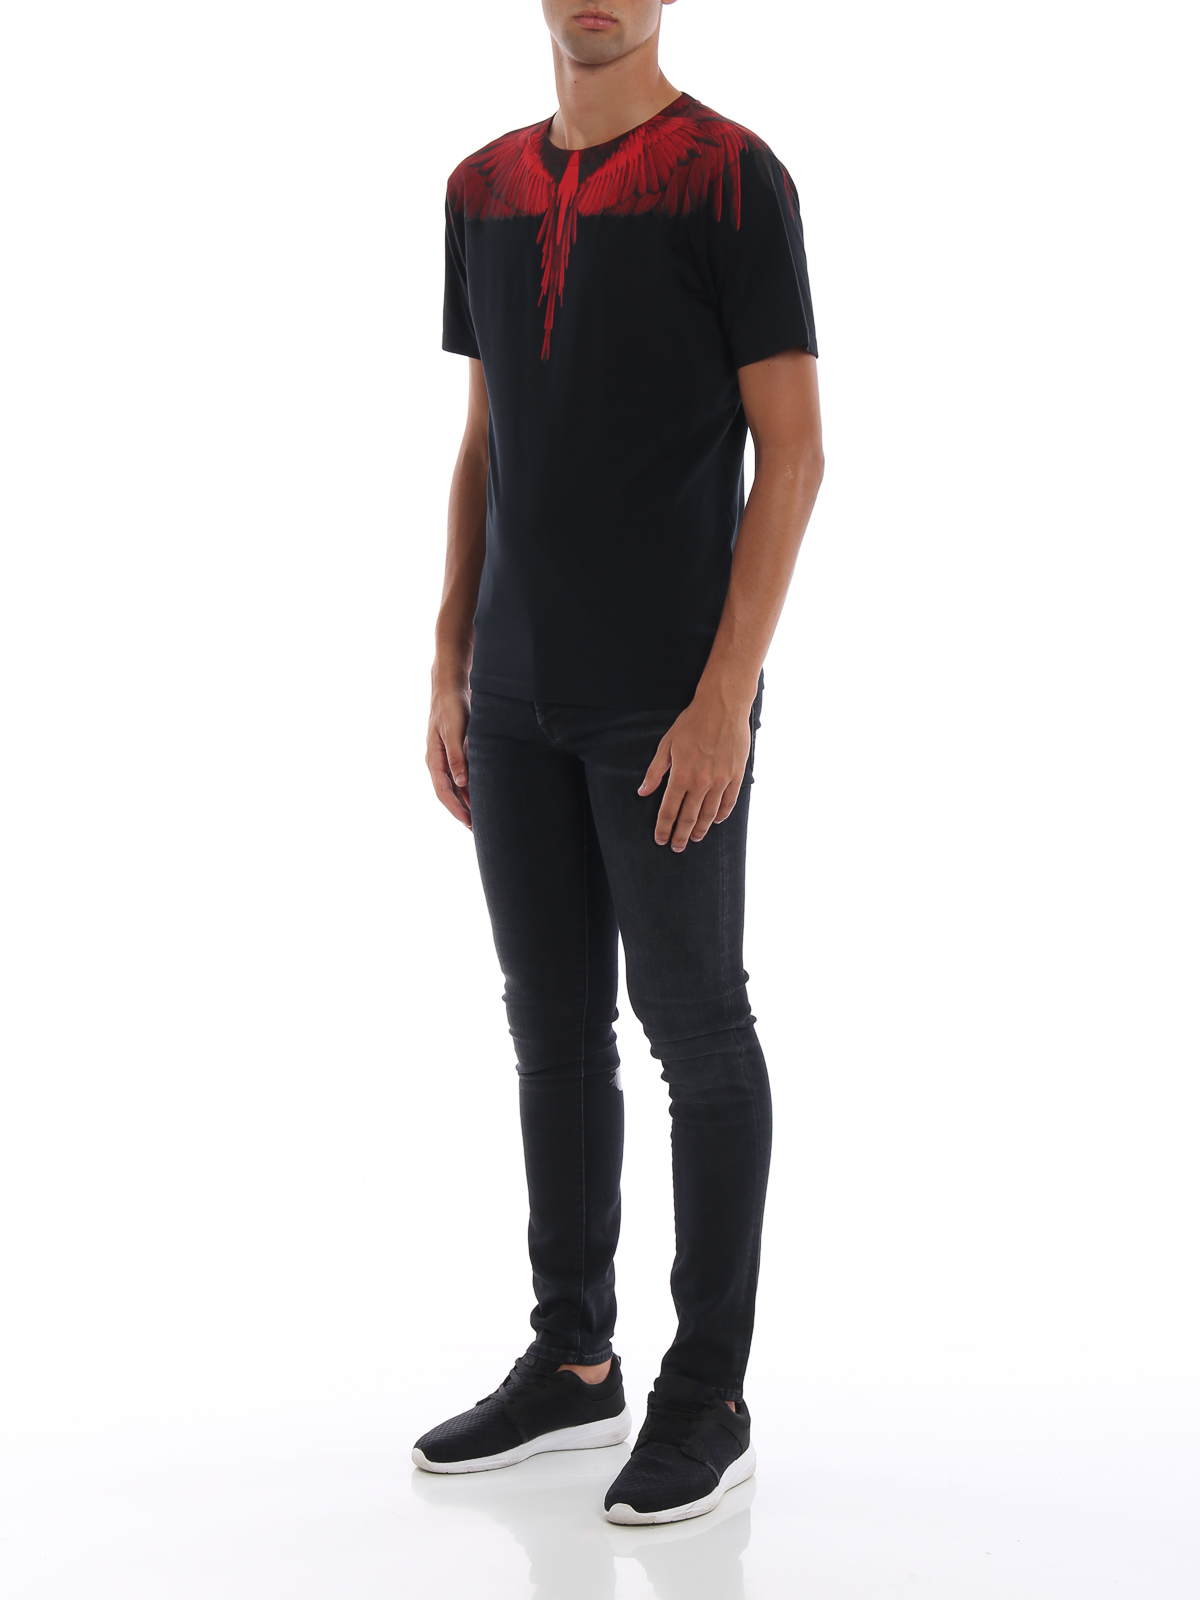 Burlon - Wings red print black cotton T-shirt - CMAA018E180010011020